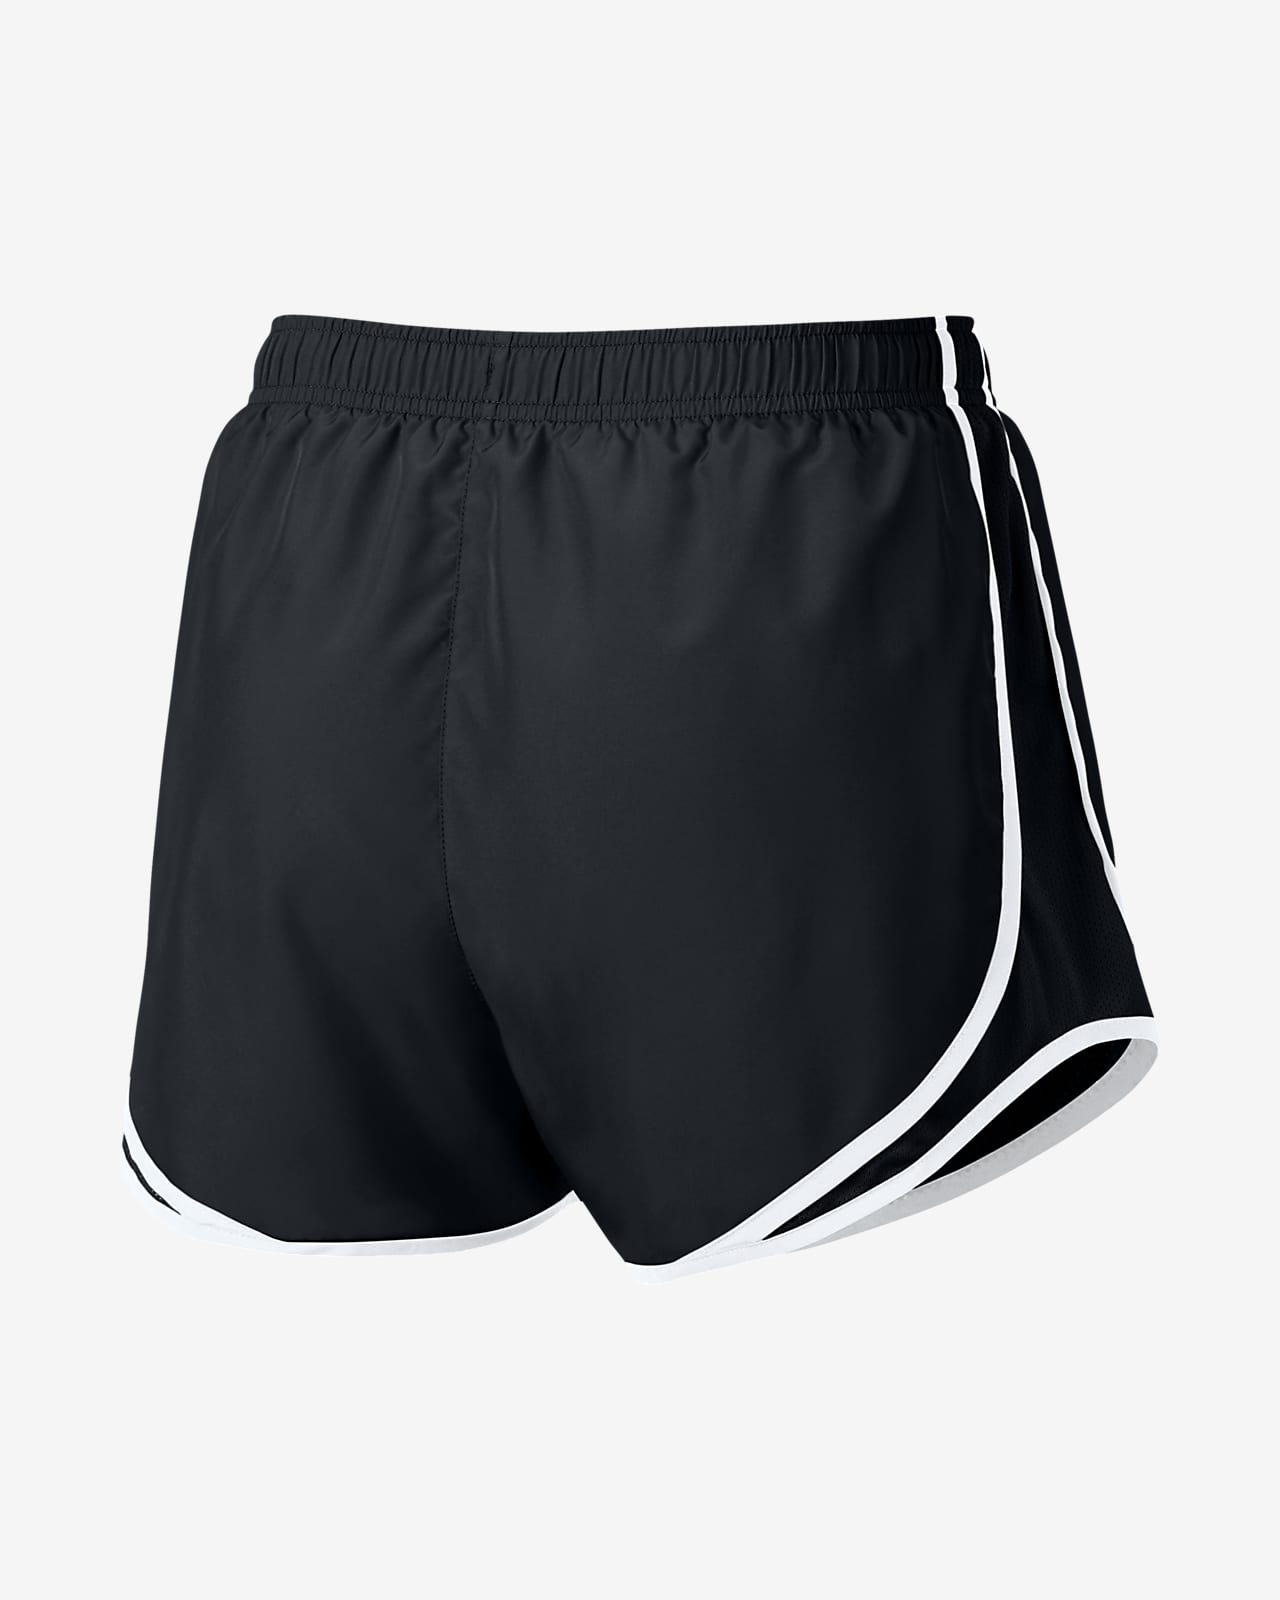 nike running tempo 5 inch shorts in black